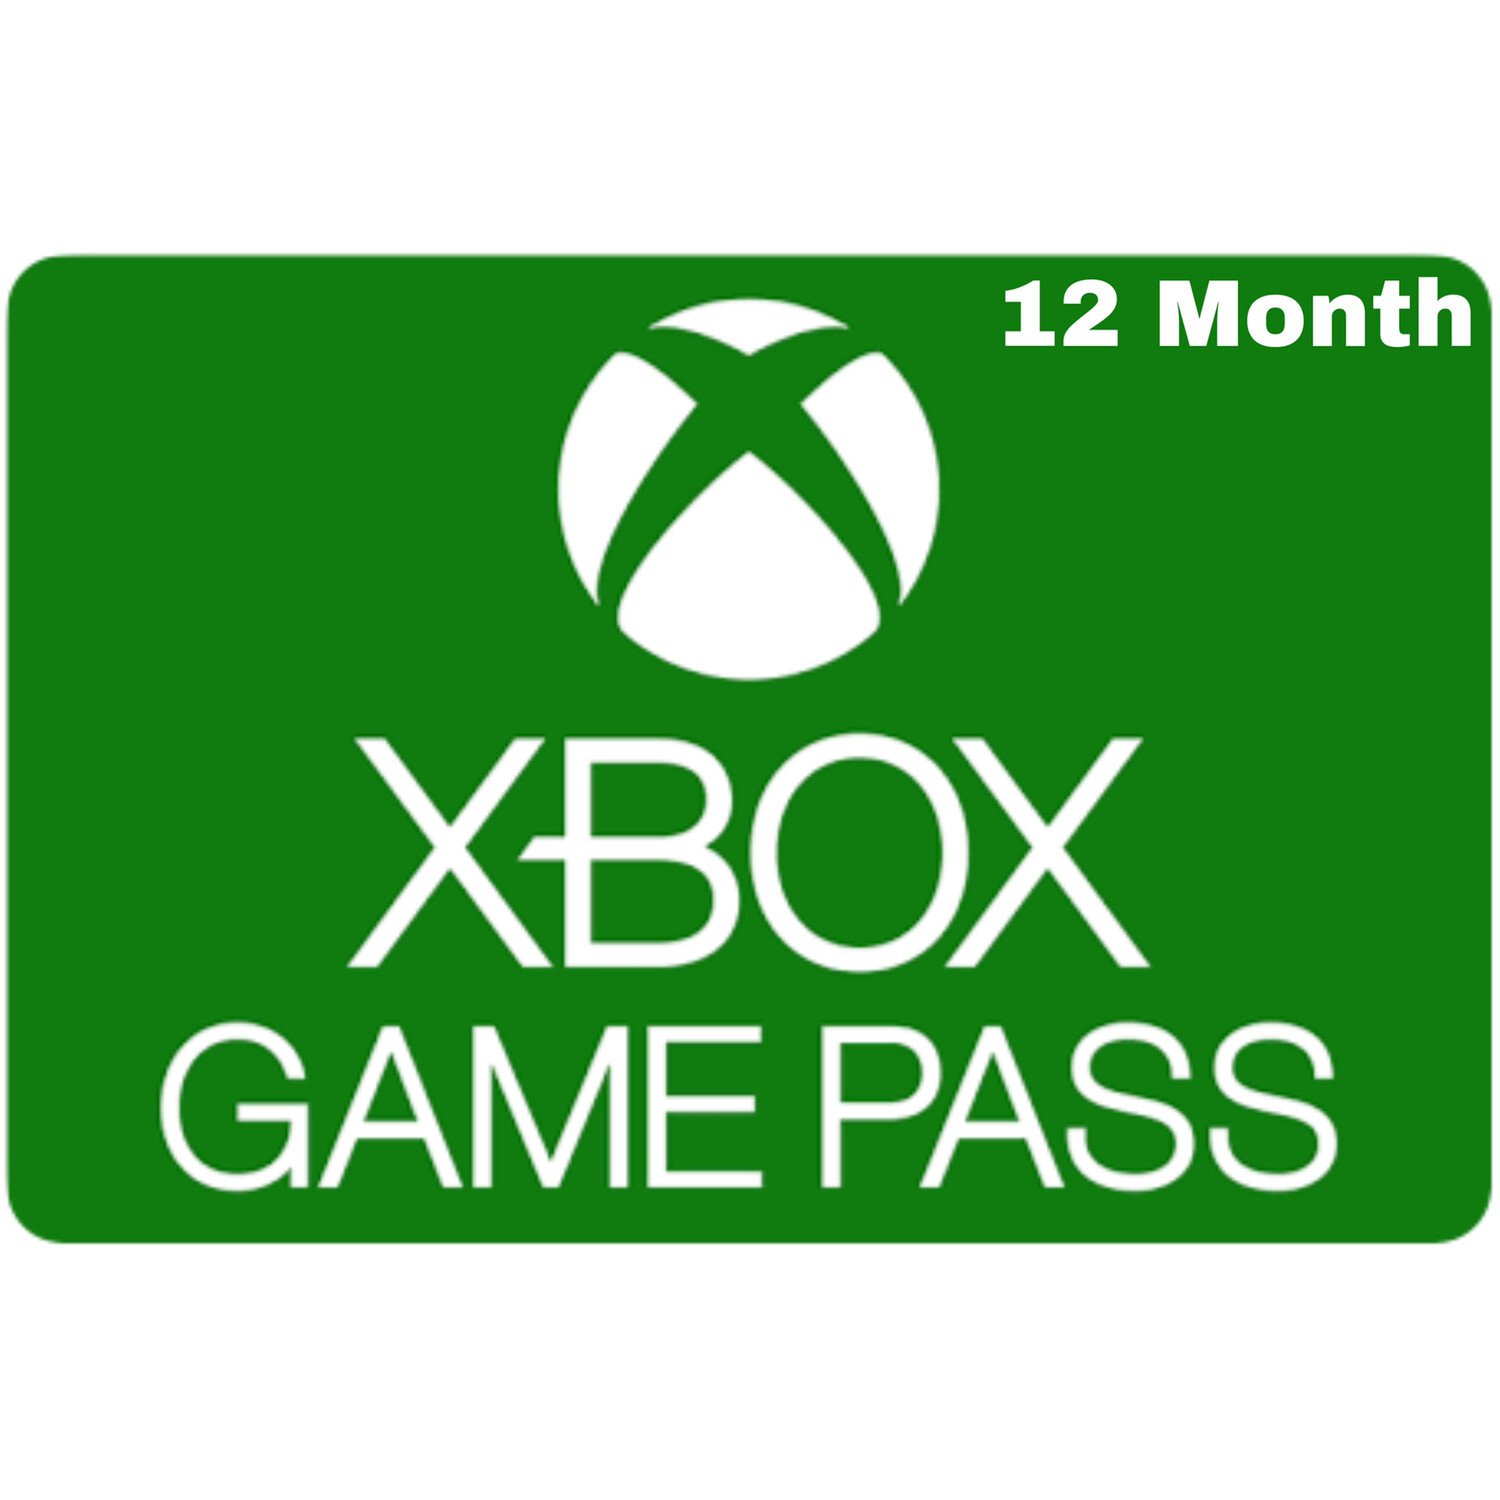 xbox game pass price 12 month